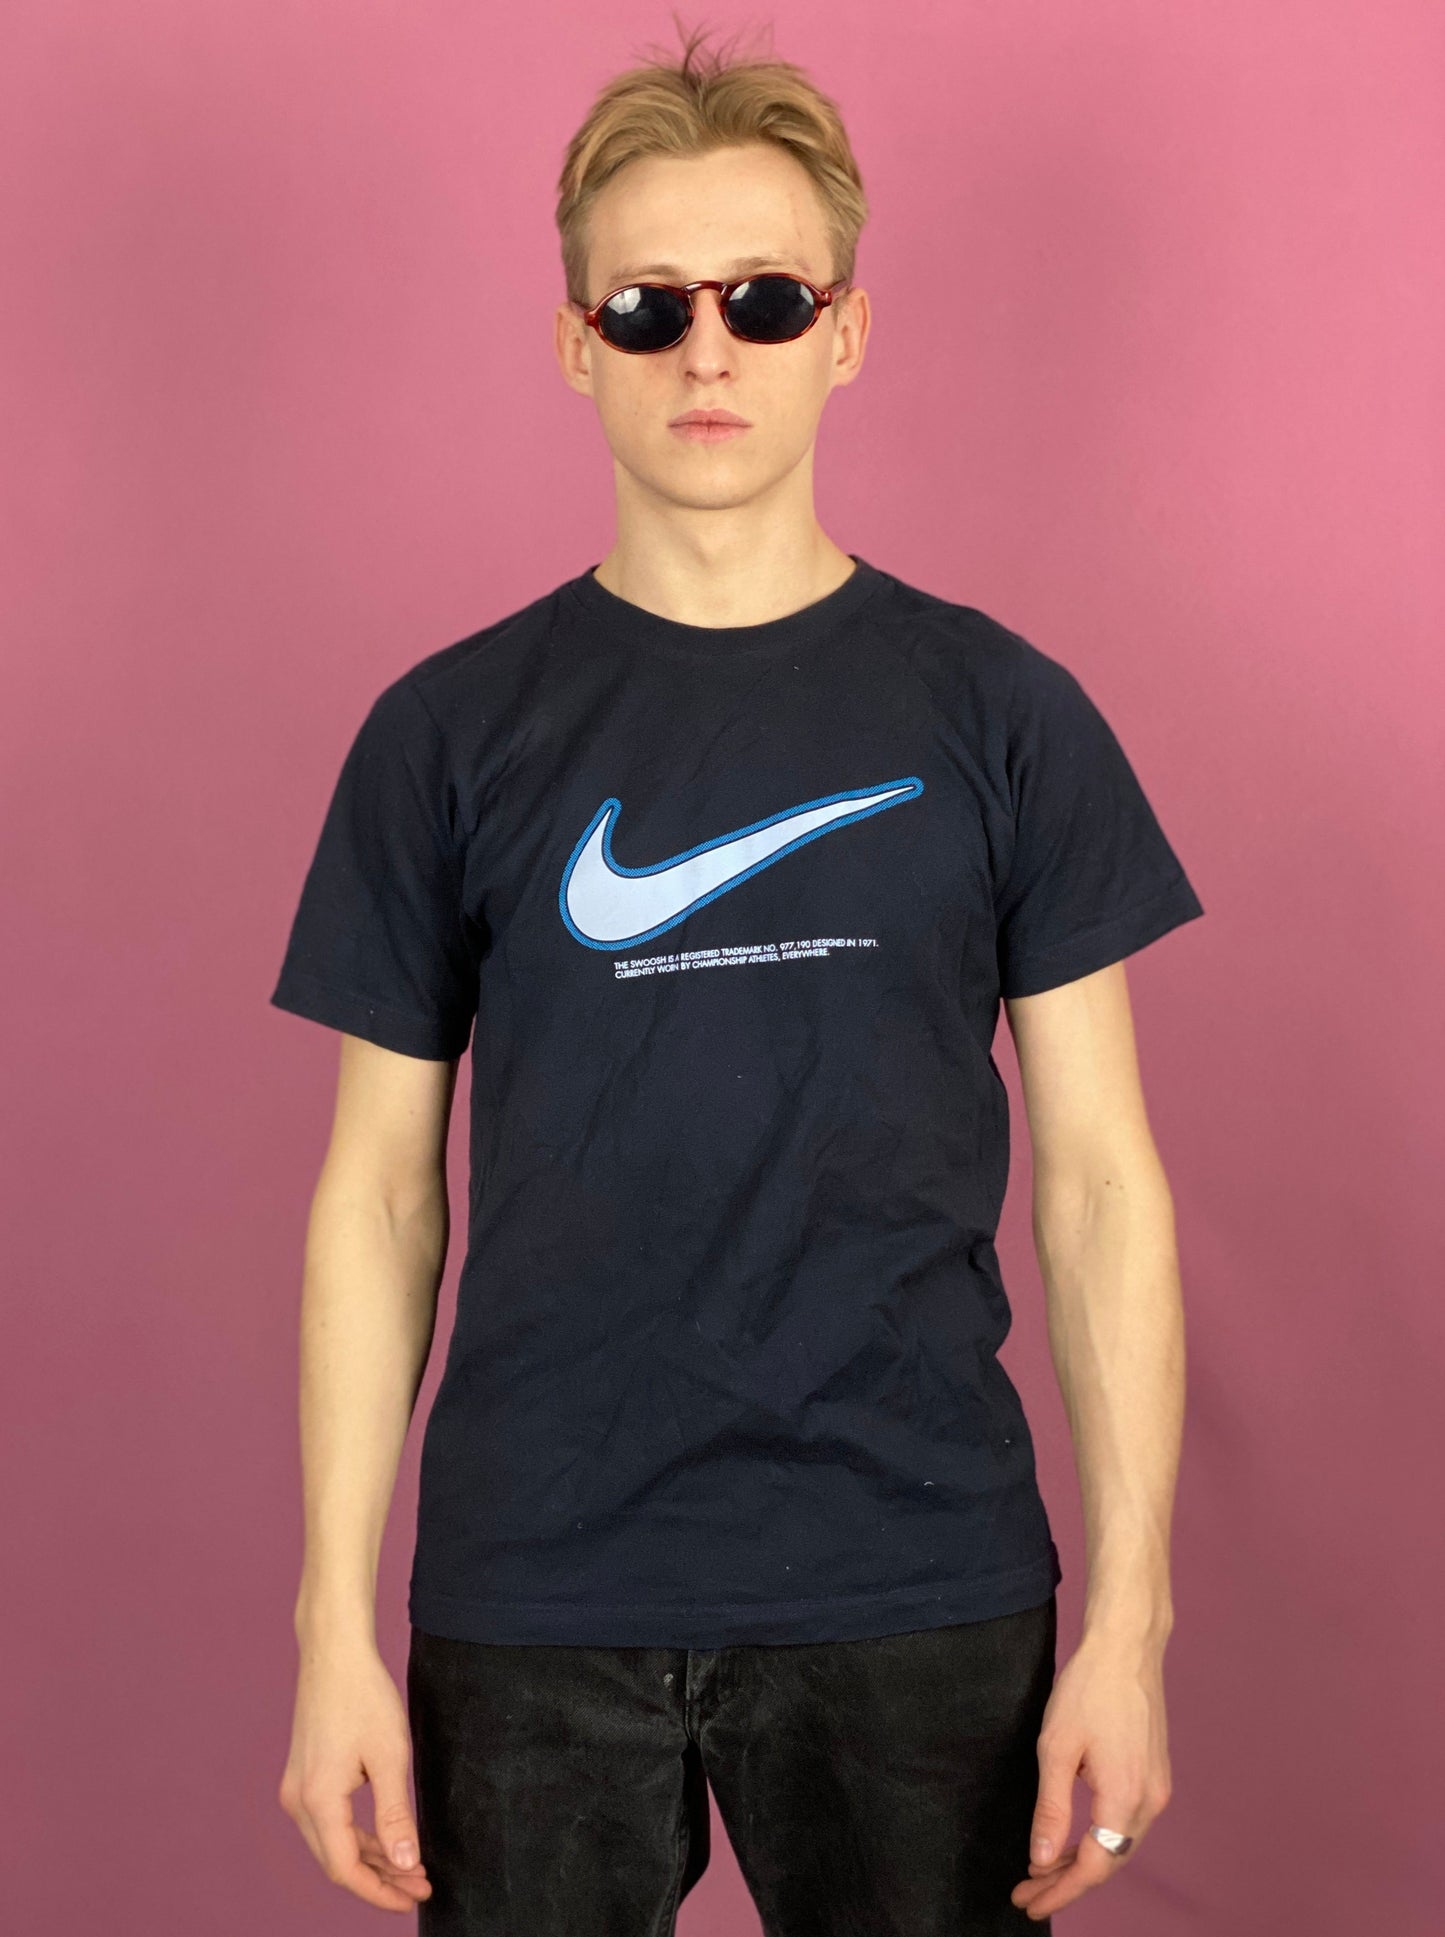 90s Nike Vintage Men's T-Shirt - Small Navy Blue Cotton